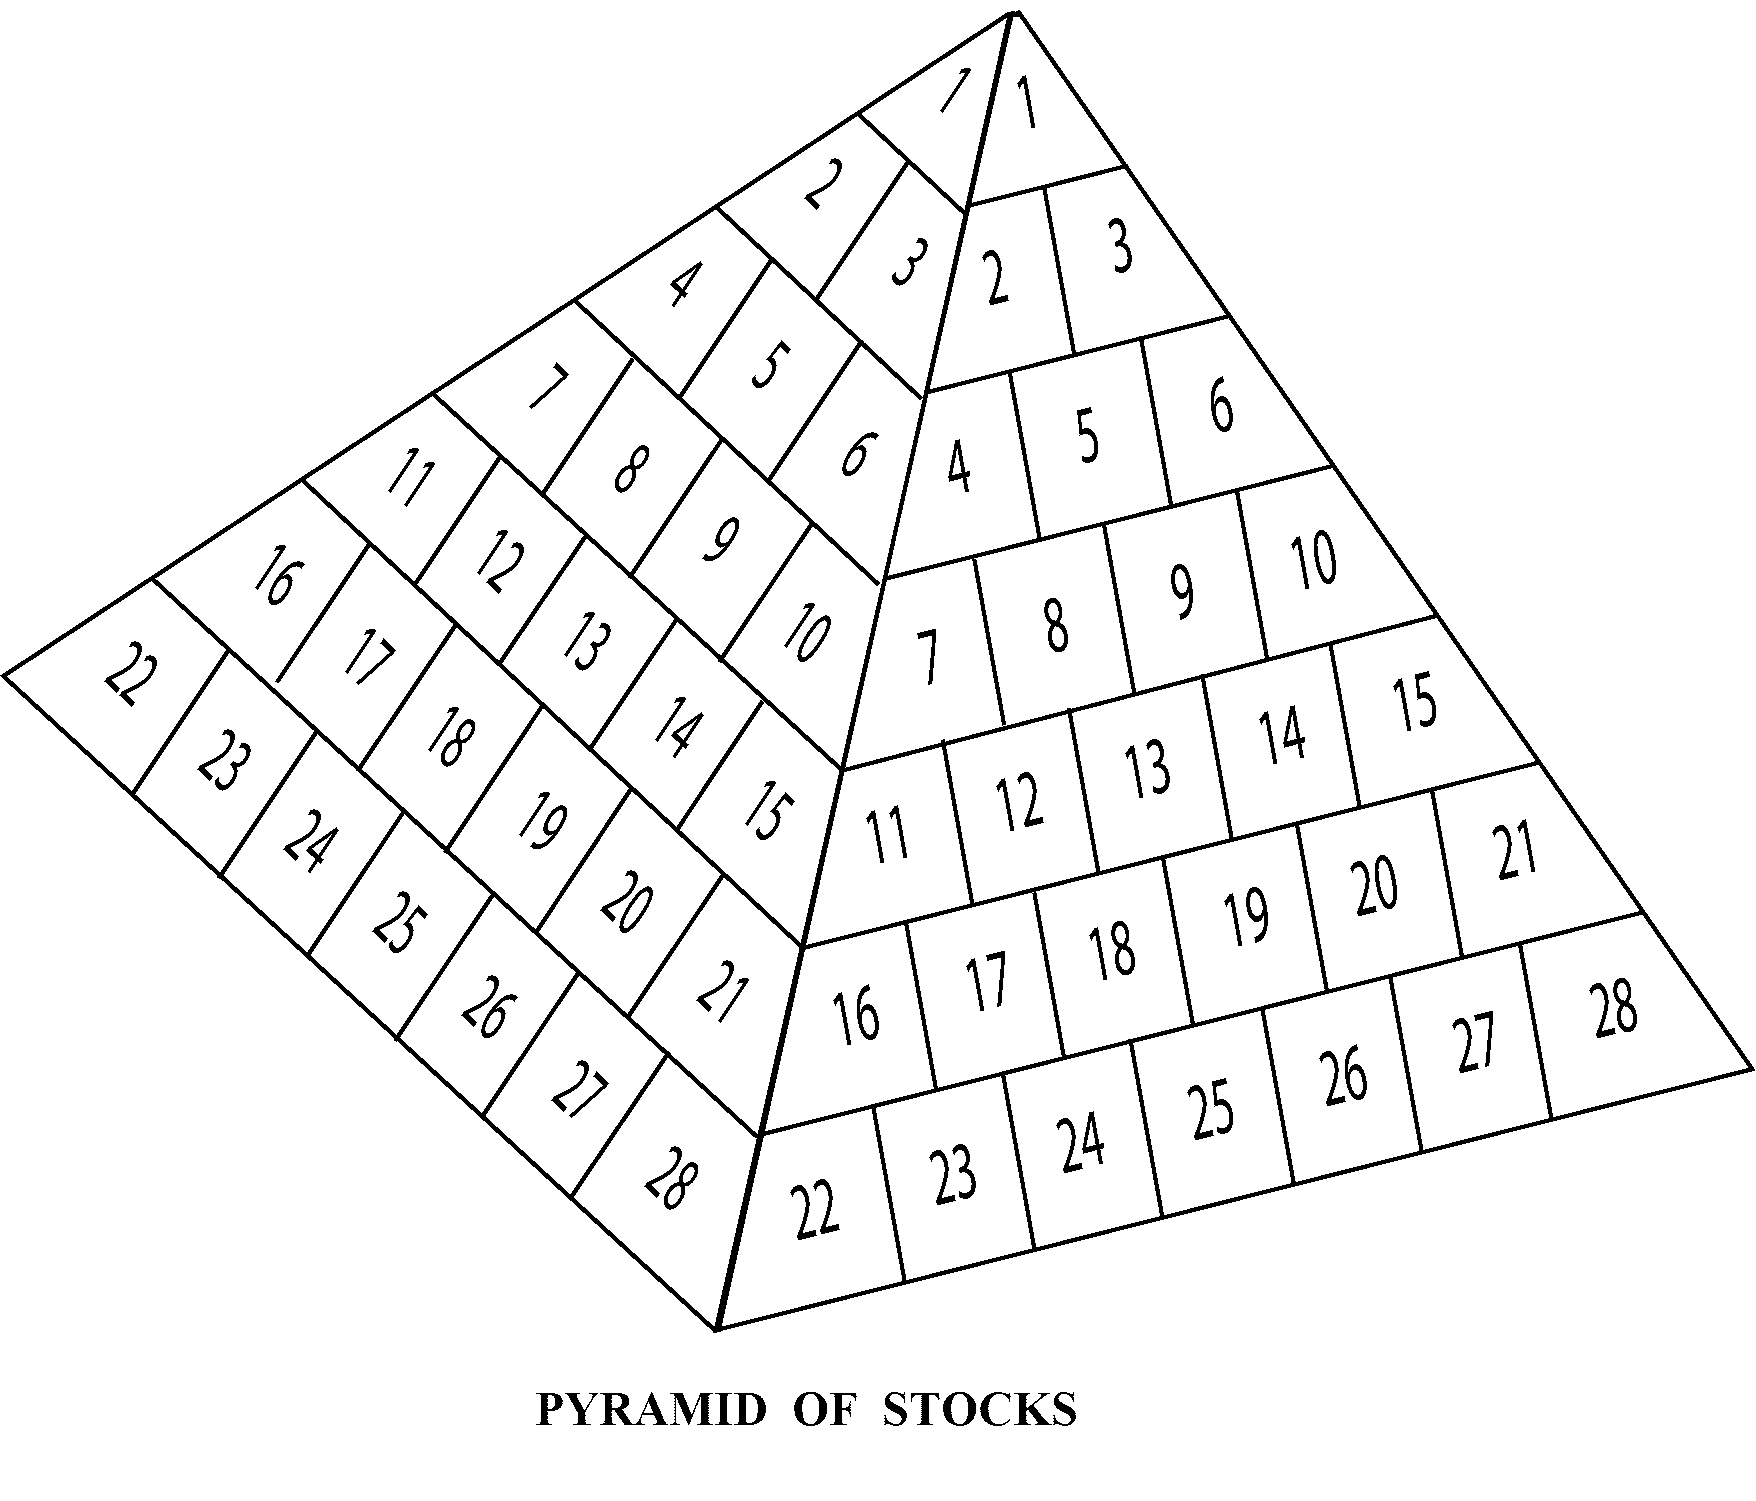  PYRAMID OF STOCKS